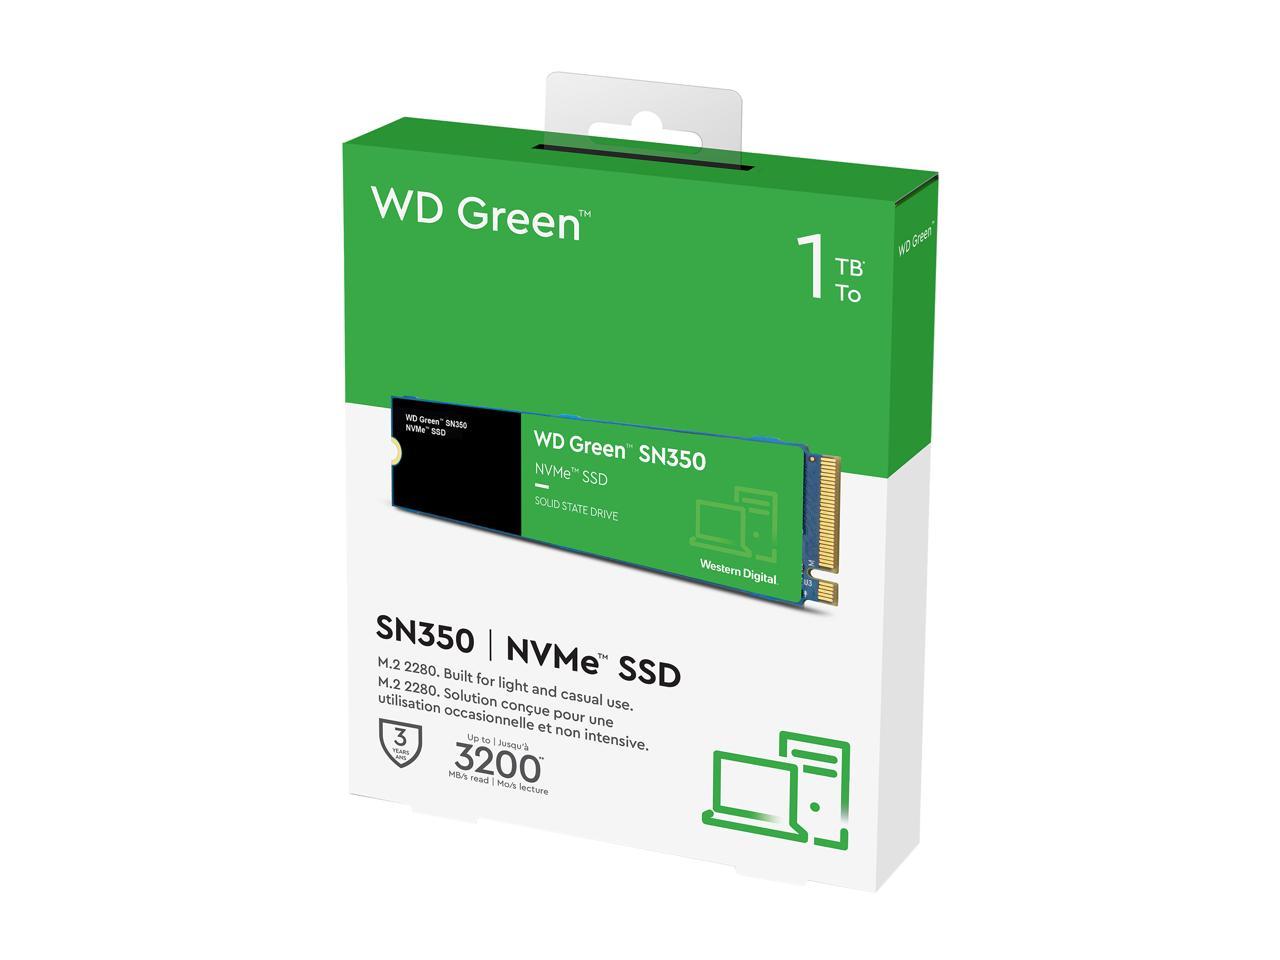 1TB Western Digital WD Green SN350 PCI-Express 3.0 x4 Internal SSD $38 + Free Shipping